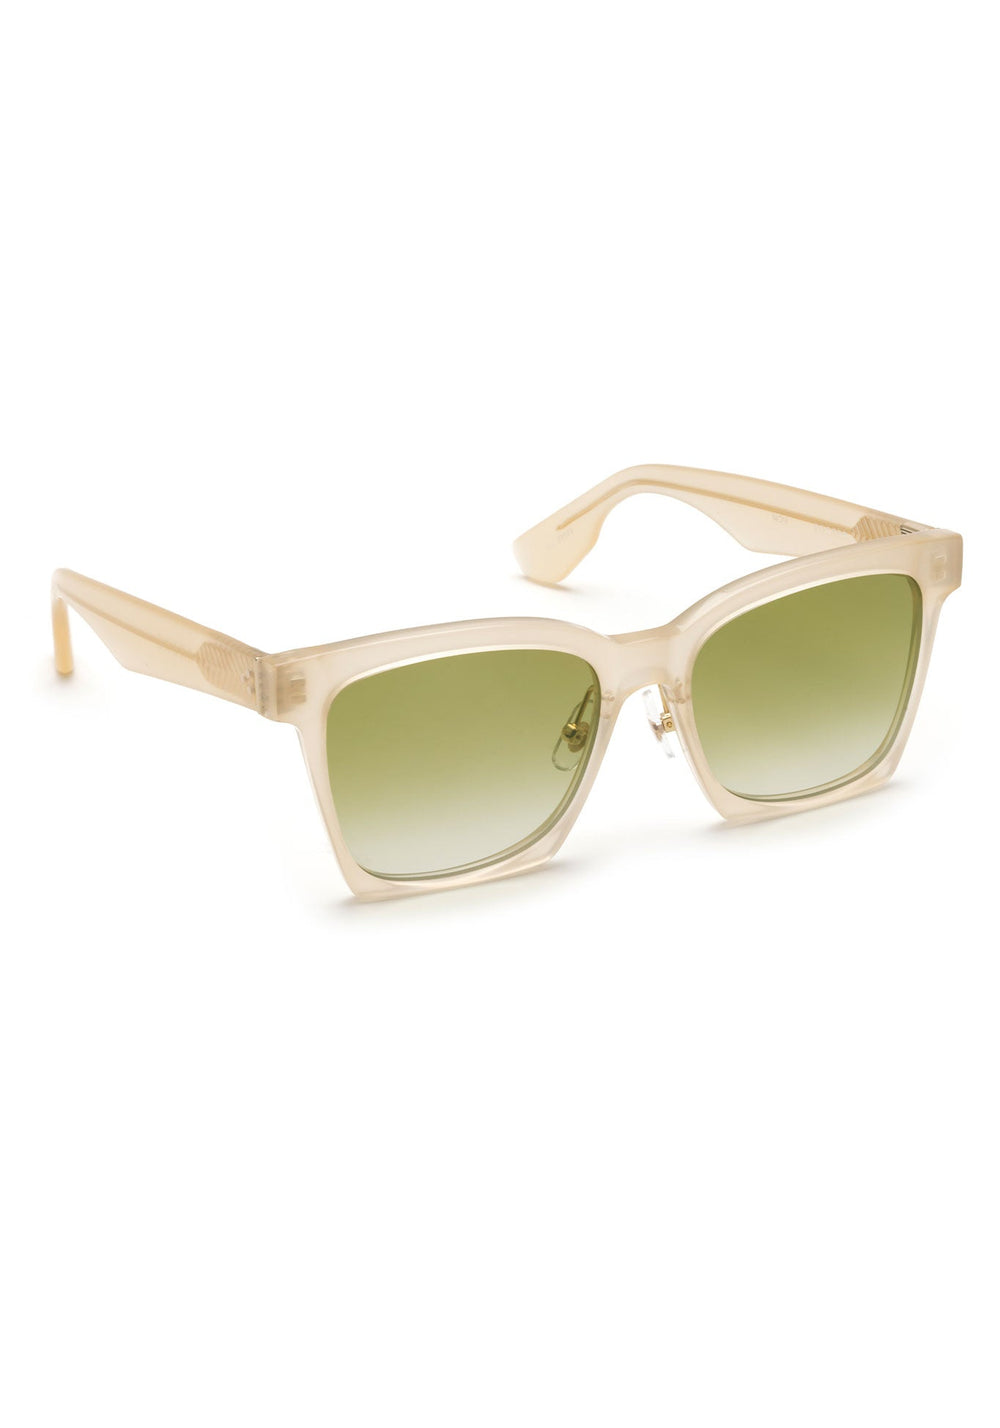 KREWE EYEGLASSES - FOSTER | Blonde + Custom Vanity Tint Handcrafted, luxury oversized glasses with custom green gradient tinted lenses